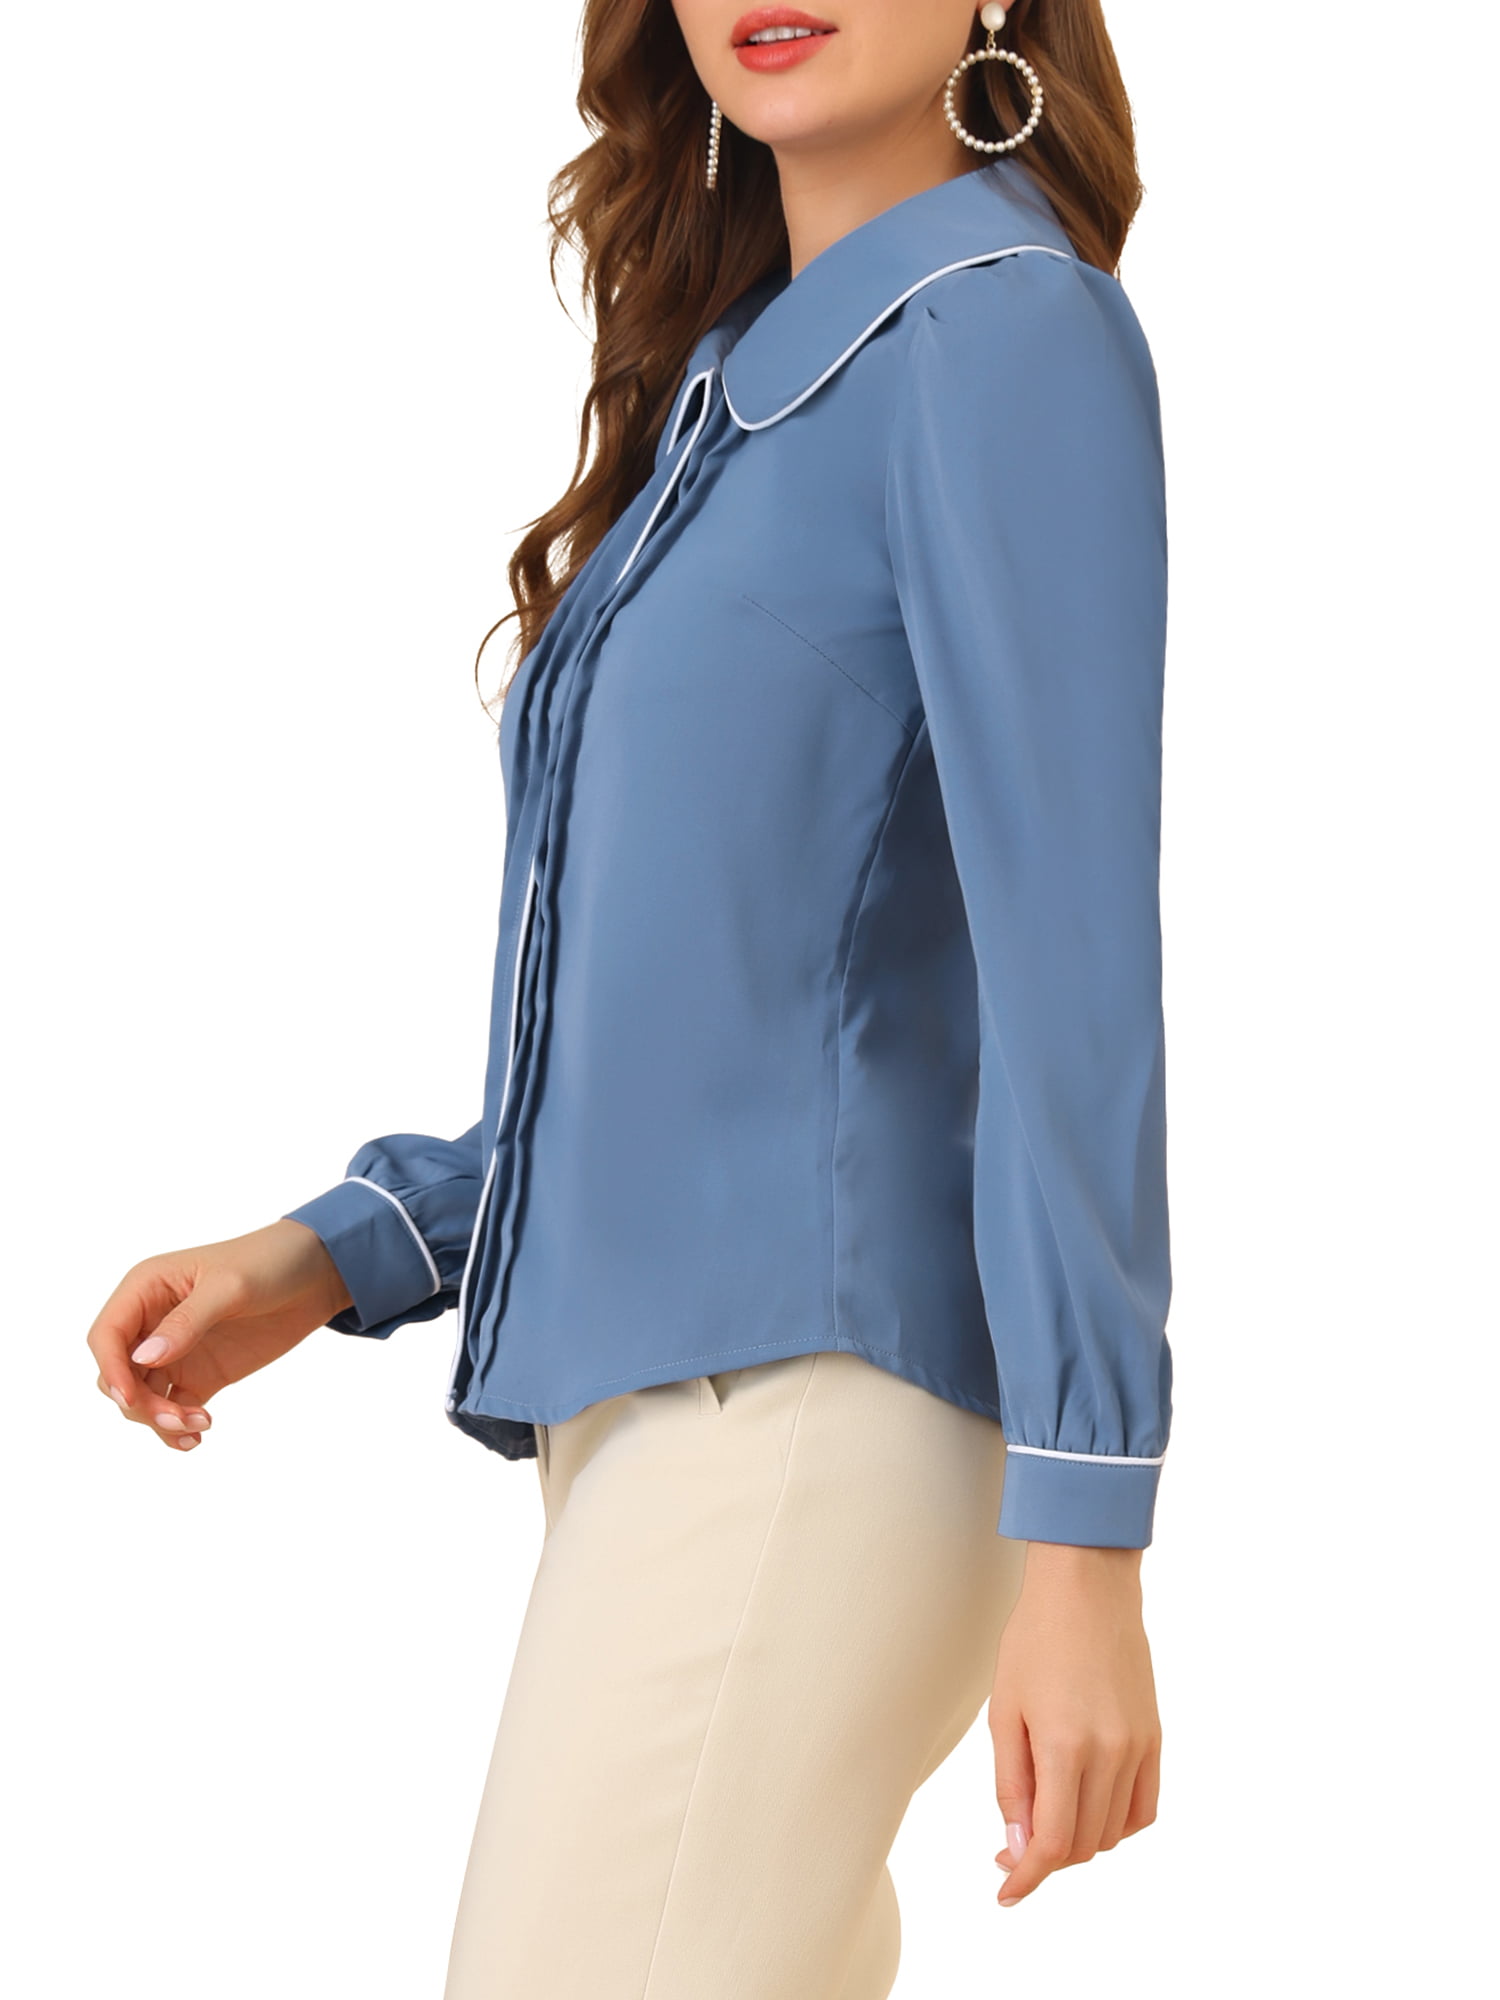 Unique Bargains Women's Peter Pan Collar Shirt Puff Sleeve Work Blouse Tops  L Grey Blue